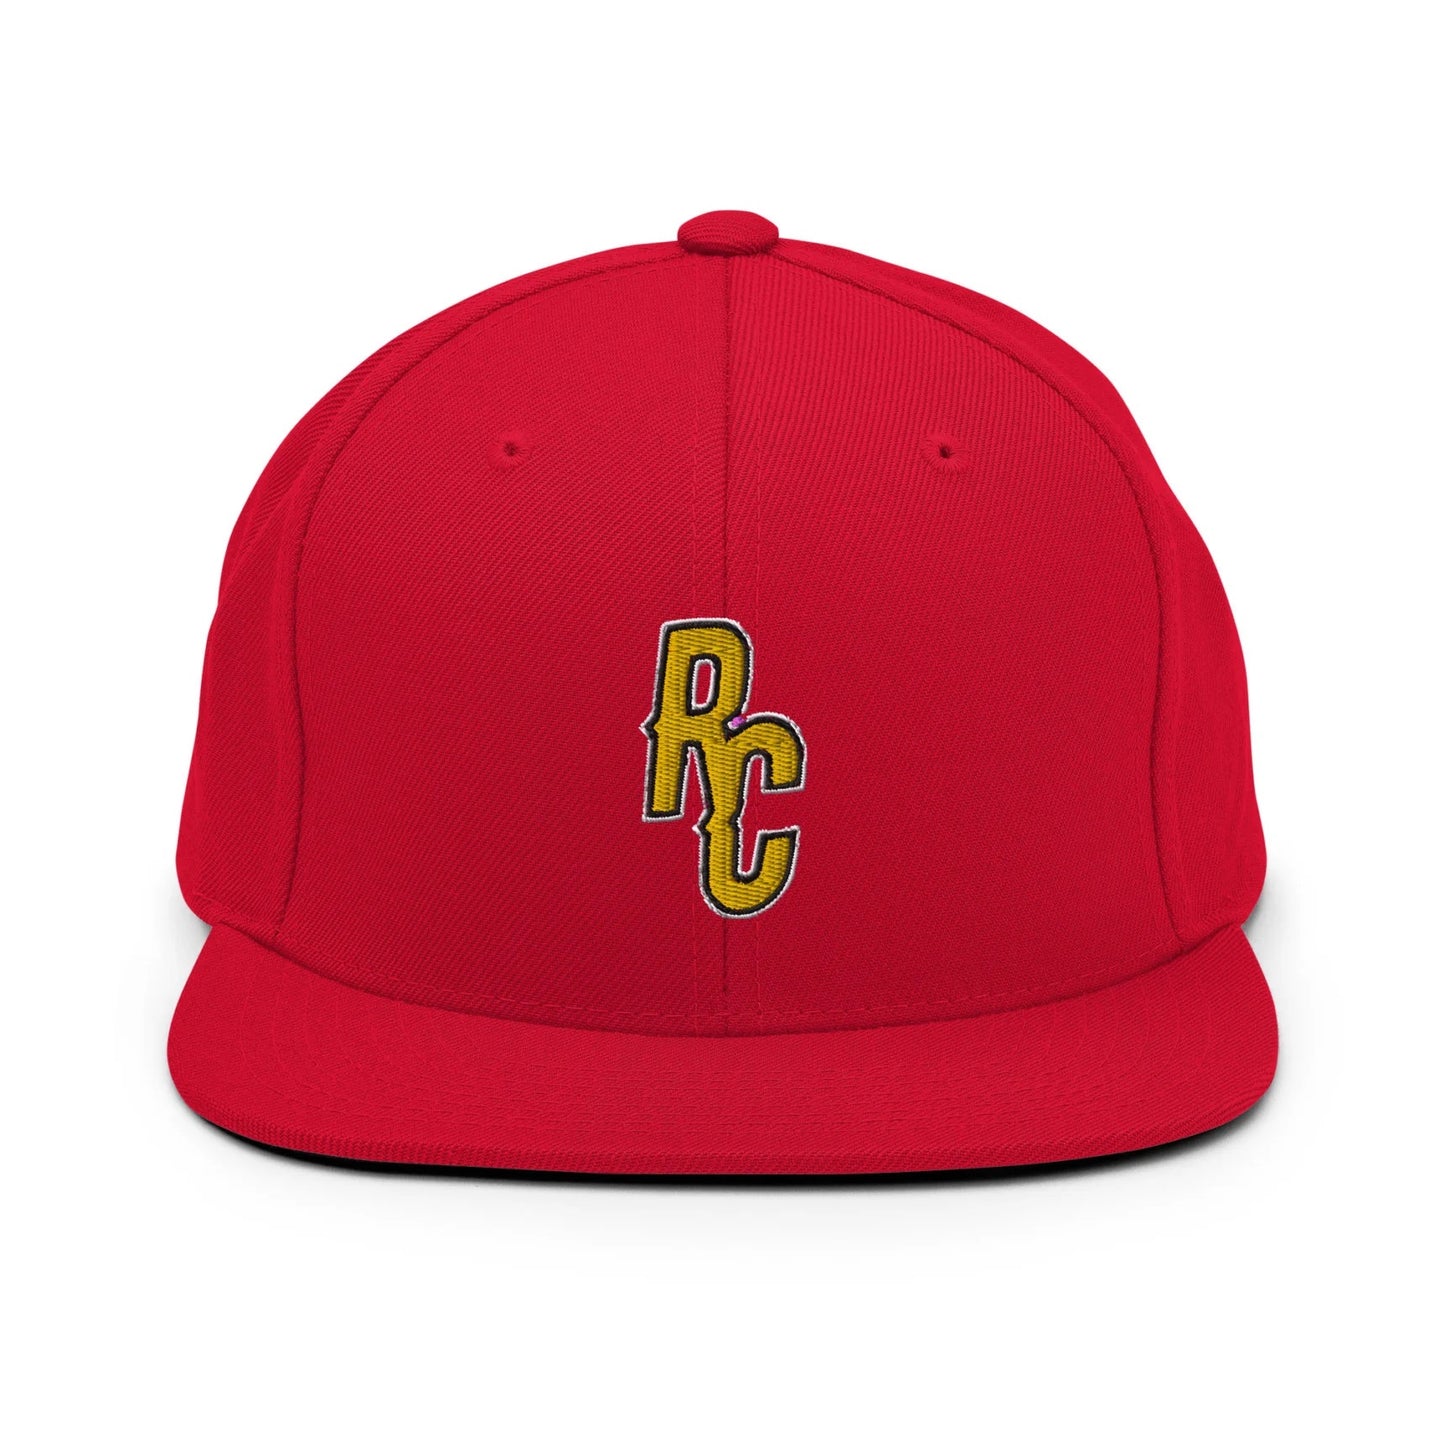 Ray Cheesy ShowZone snapback hat in red